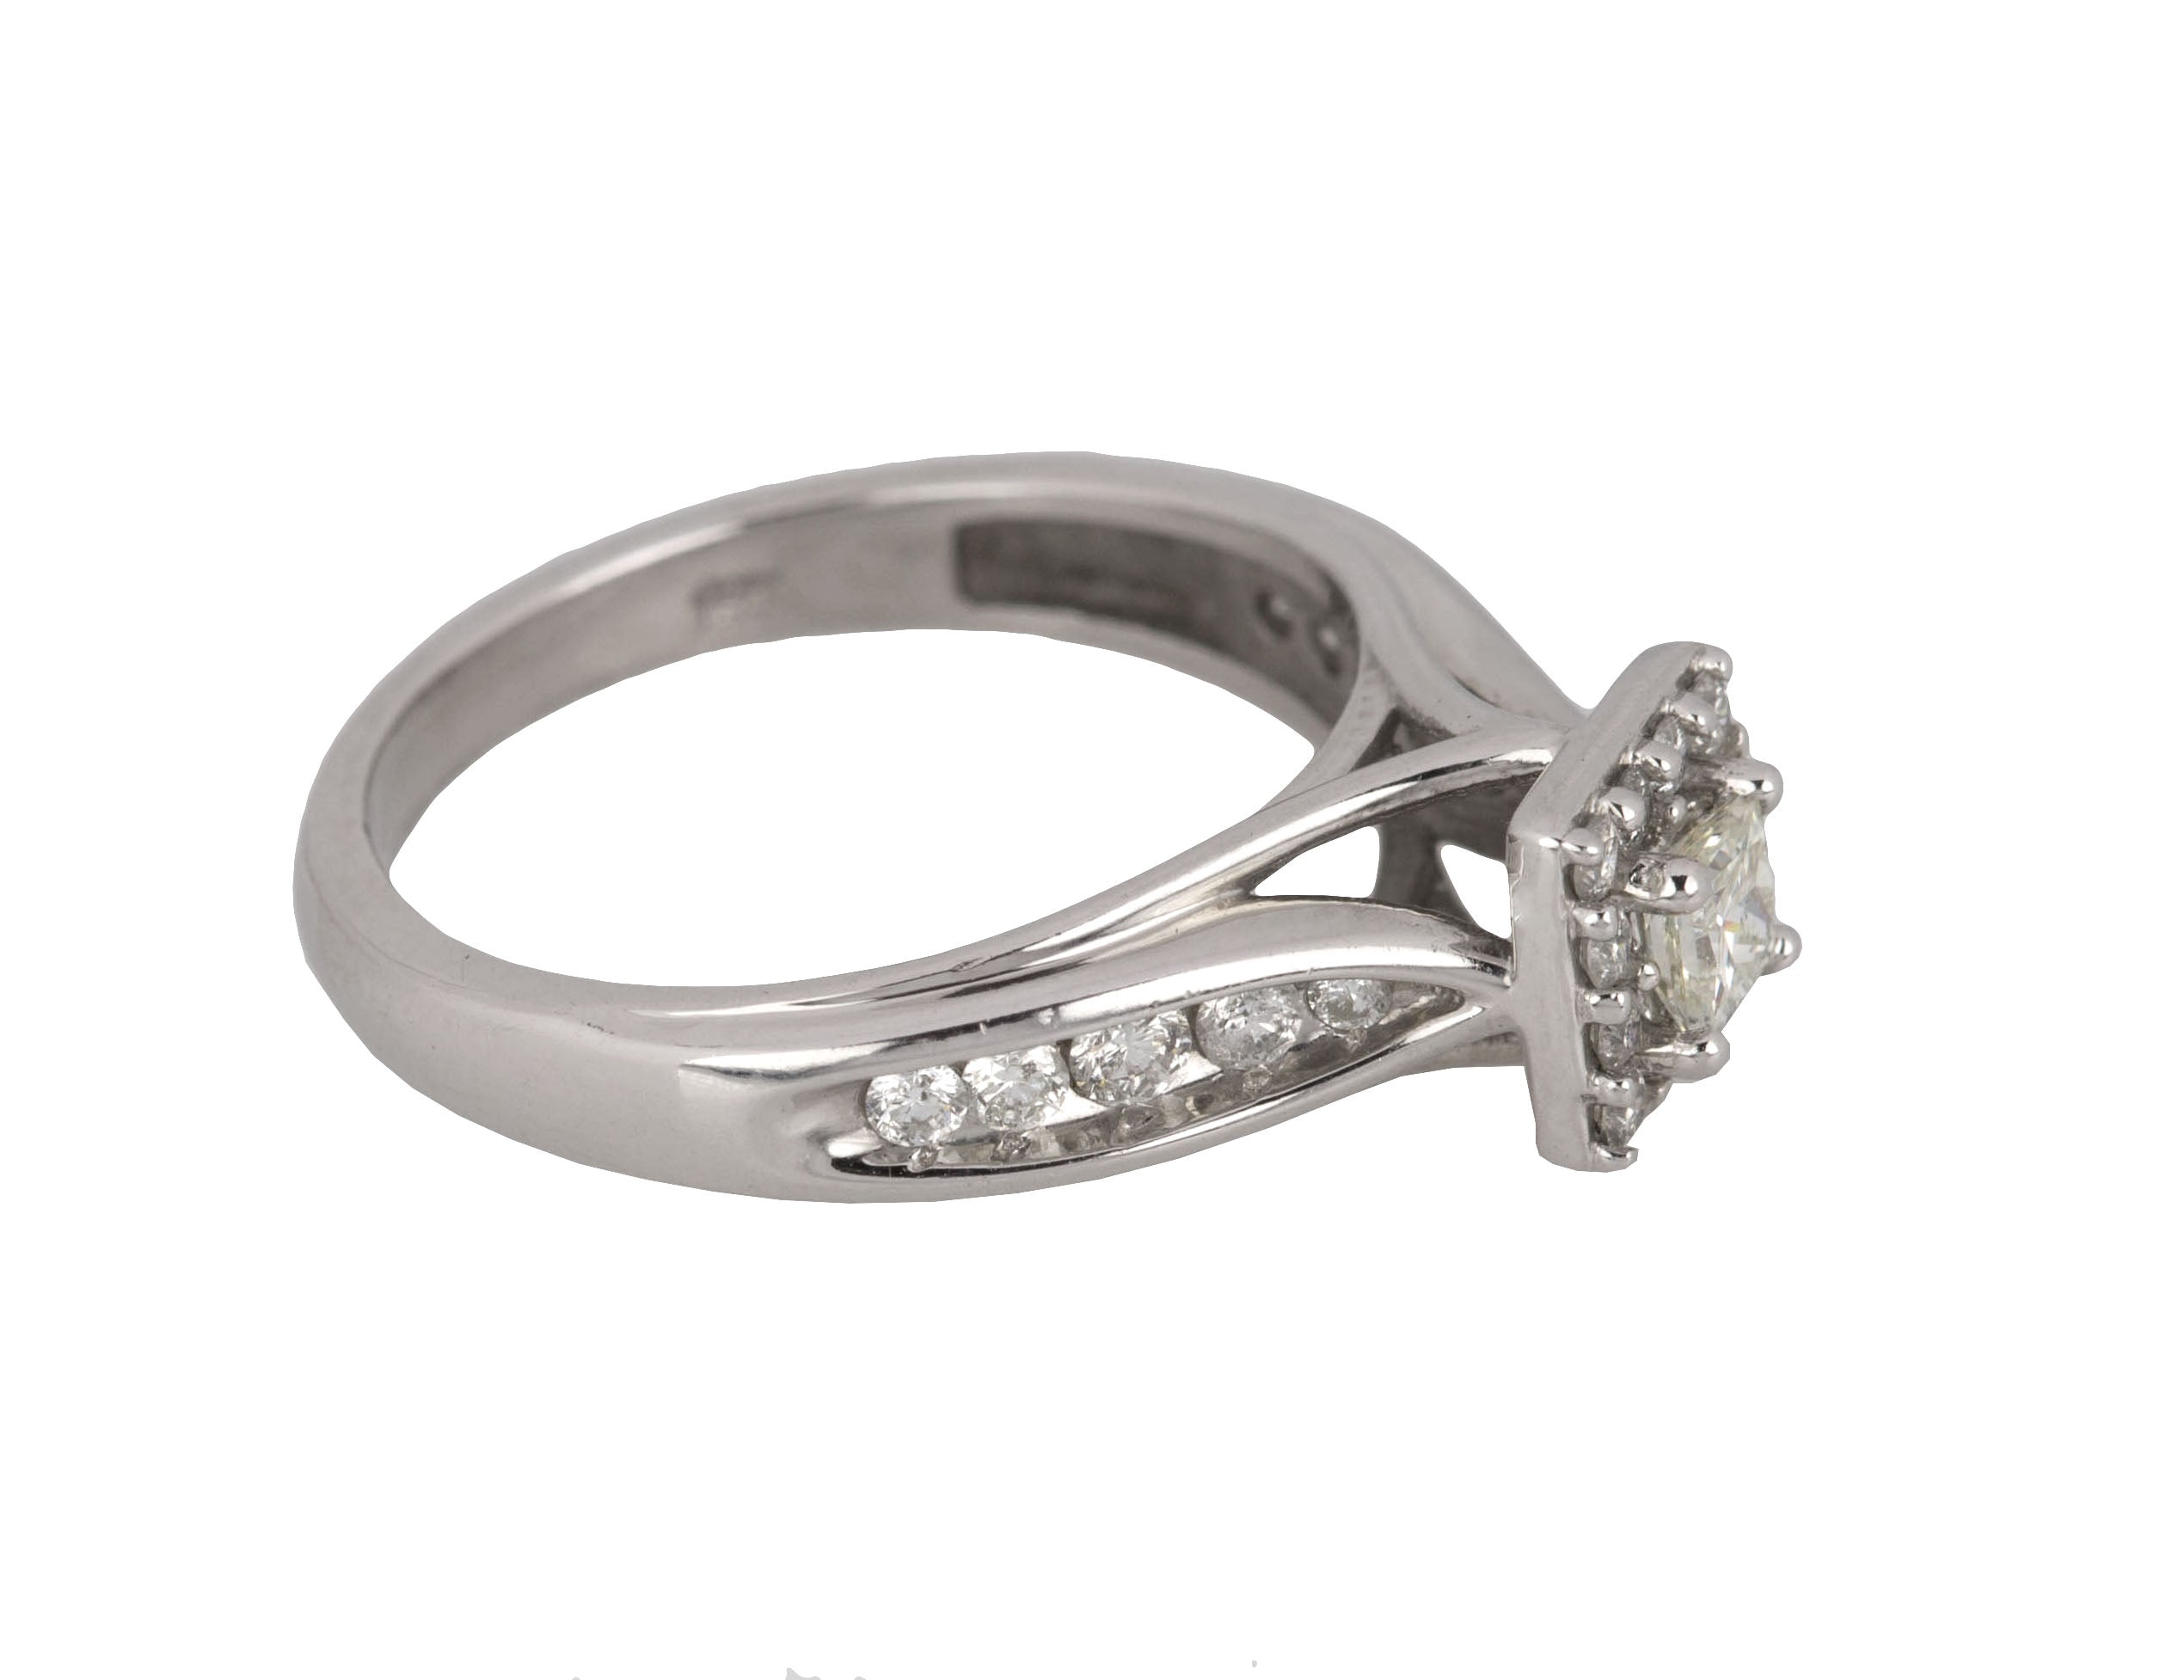 Women's Modern 10k White Gold 0.16 CT Princess Cut Diamond Engagement Ring